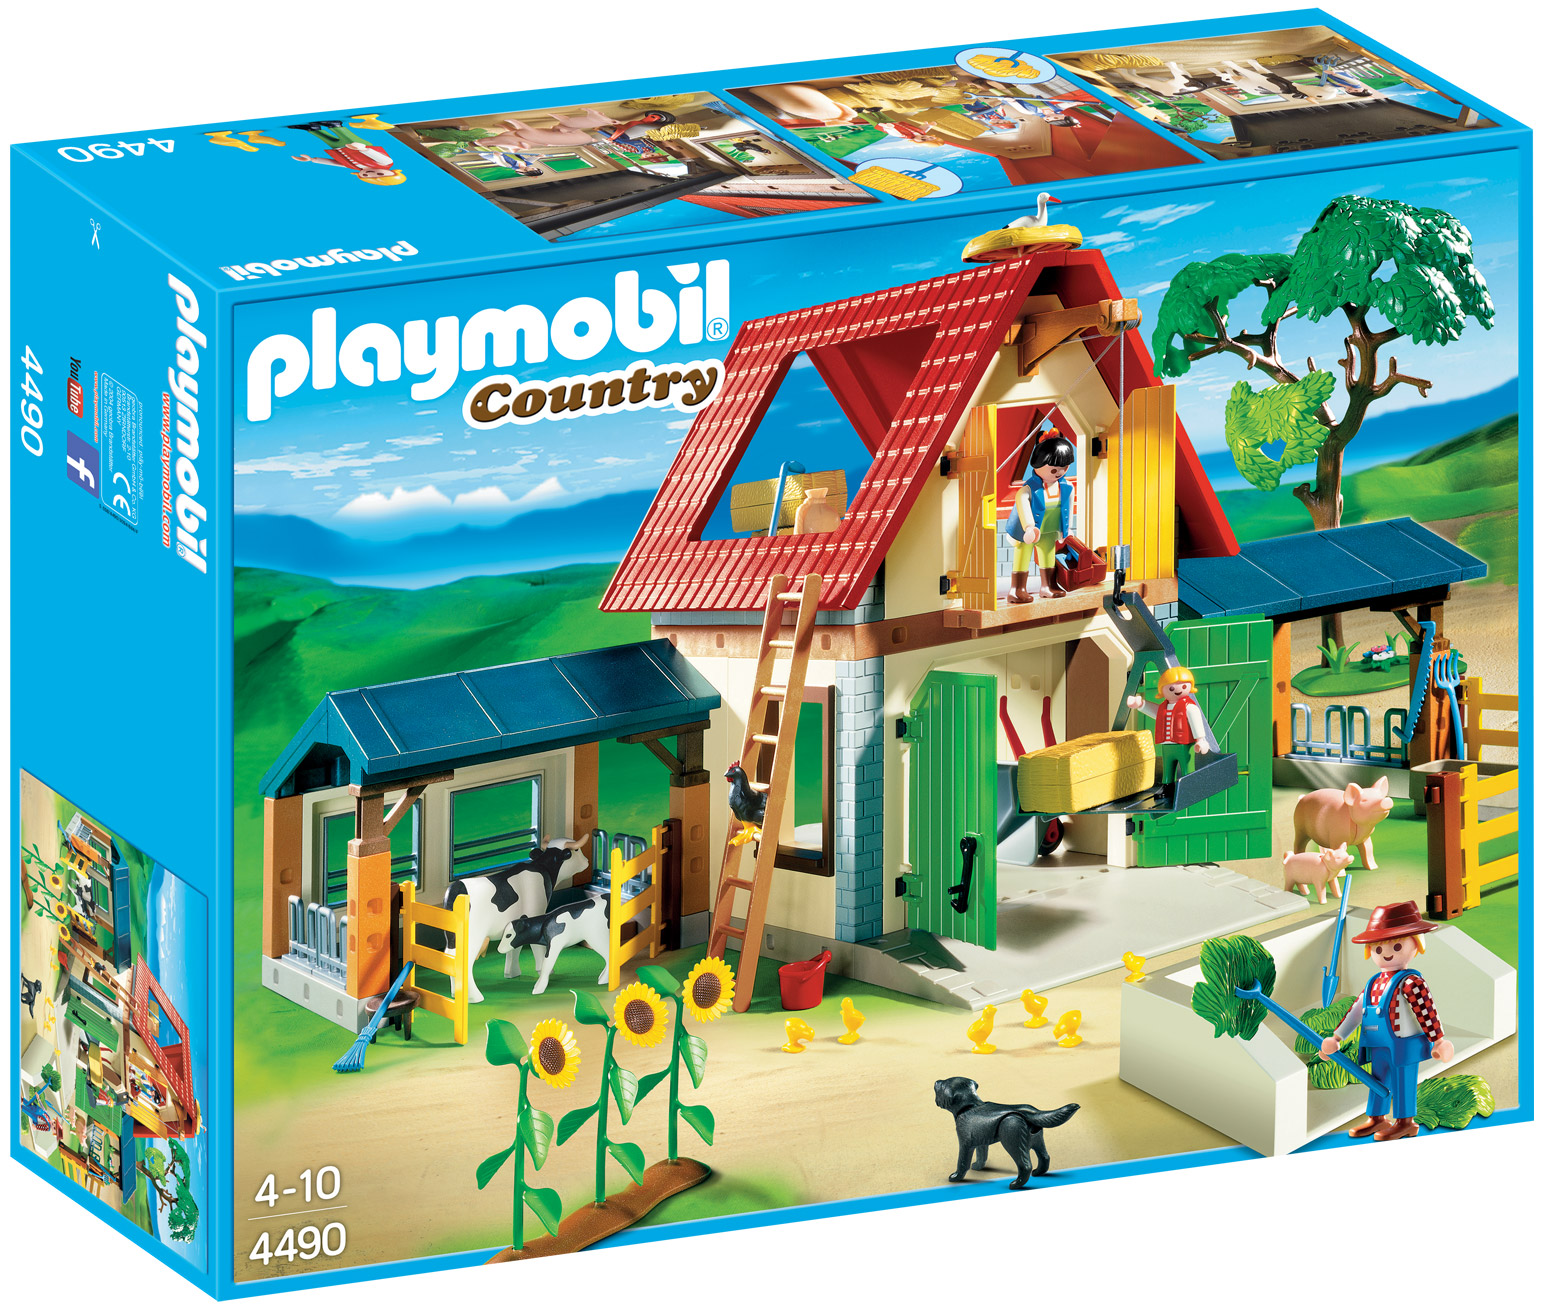 Playmobil Country 4490 pas cher, Ferme